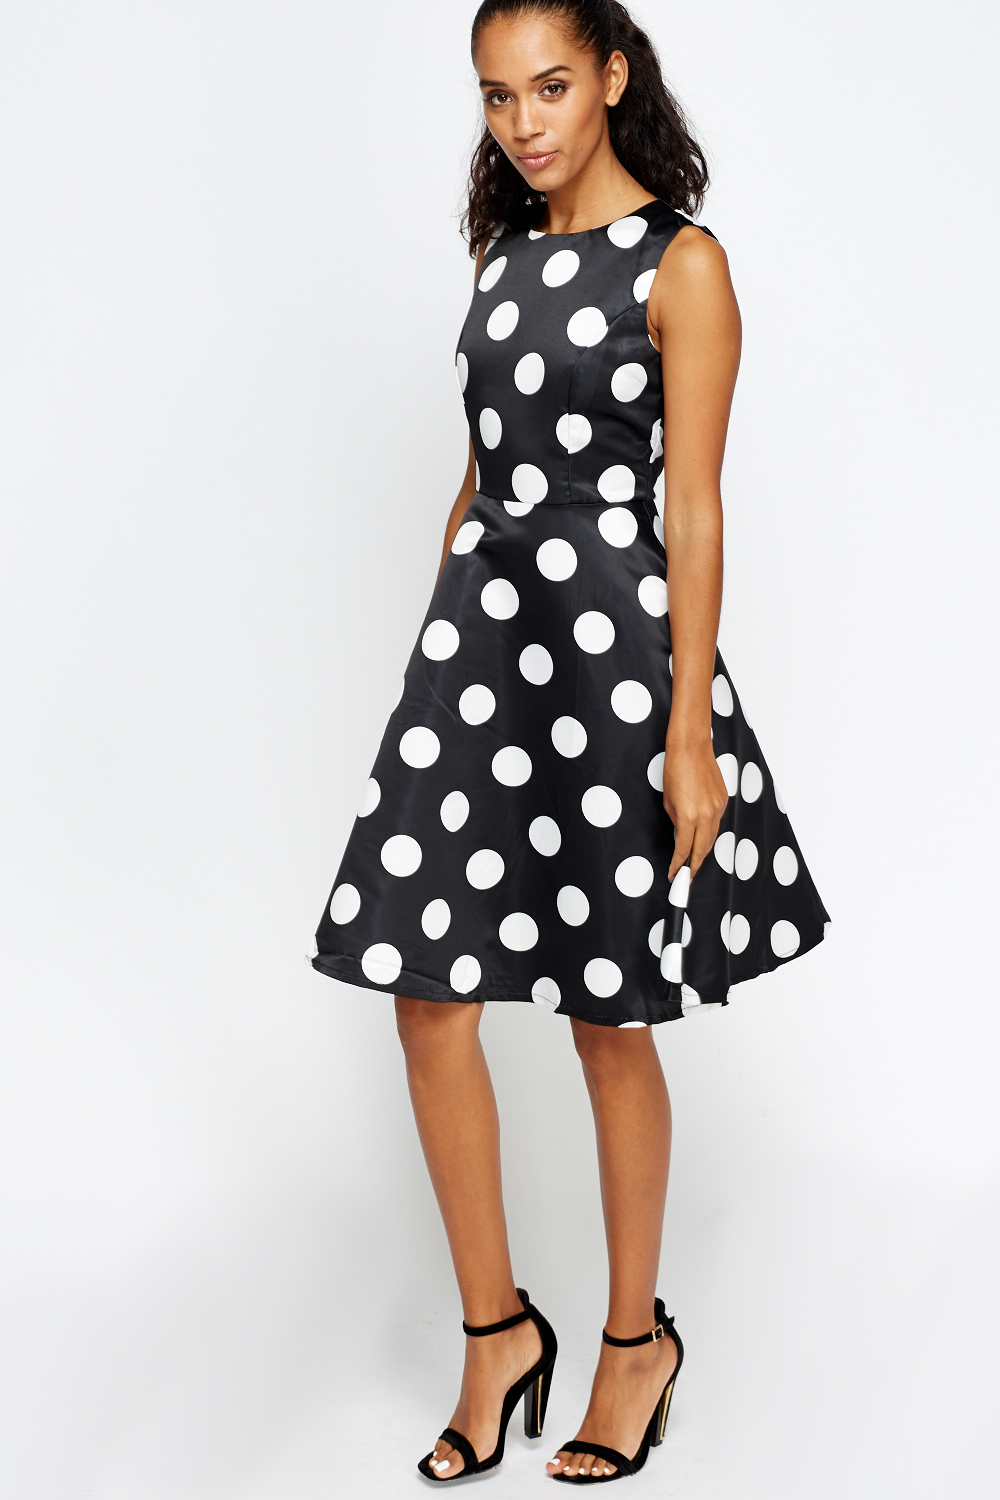 Polka Dots Dress For Women Linea Polka Dot Dress In Black Navy Lyst Chloe Howell